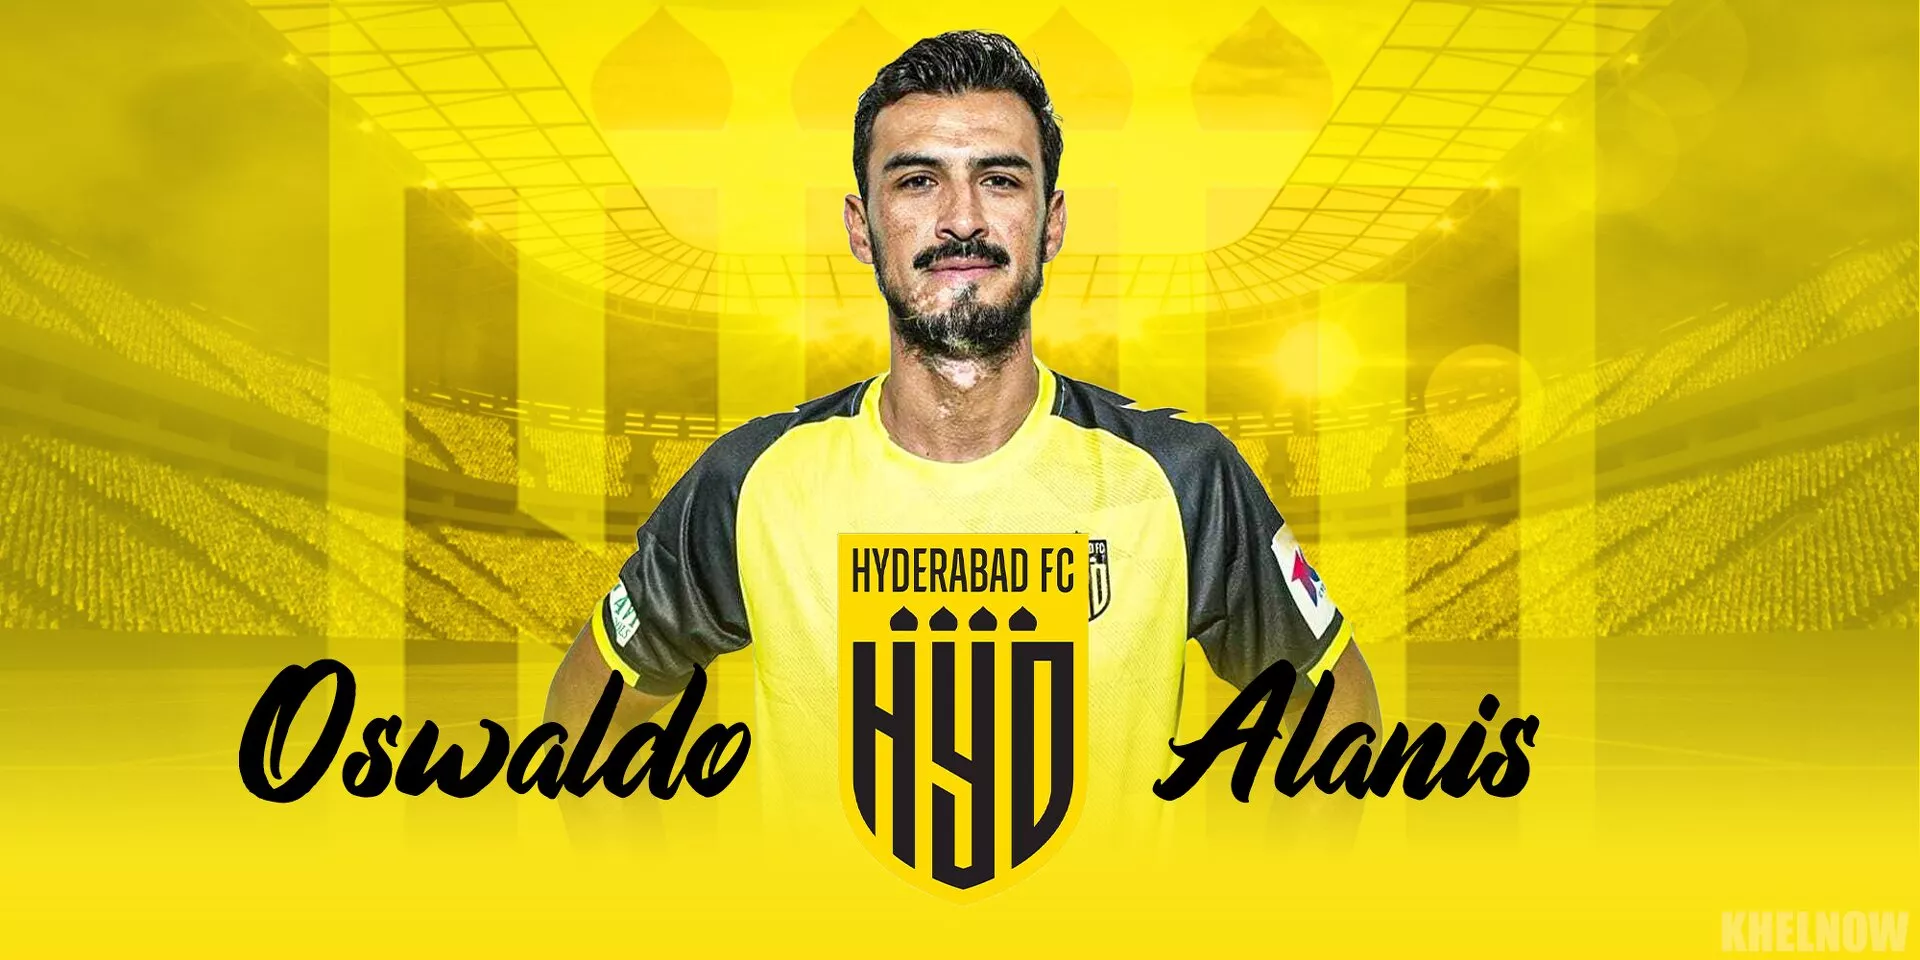 Hyderabad FC sign former Mexico defender Oswaldo Alanis